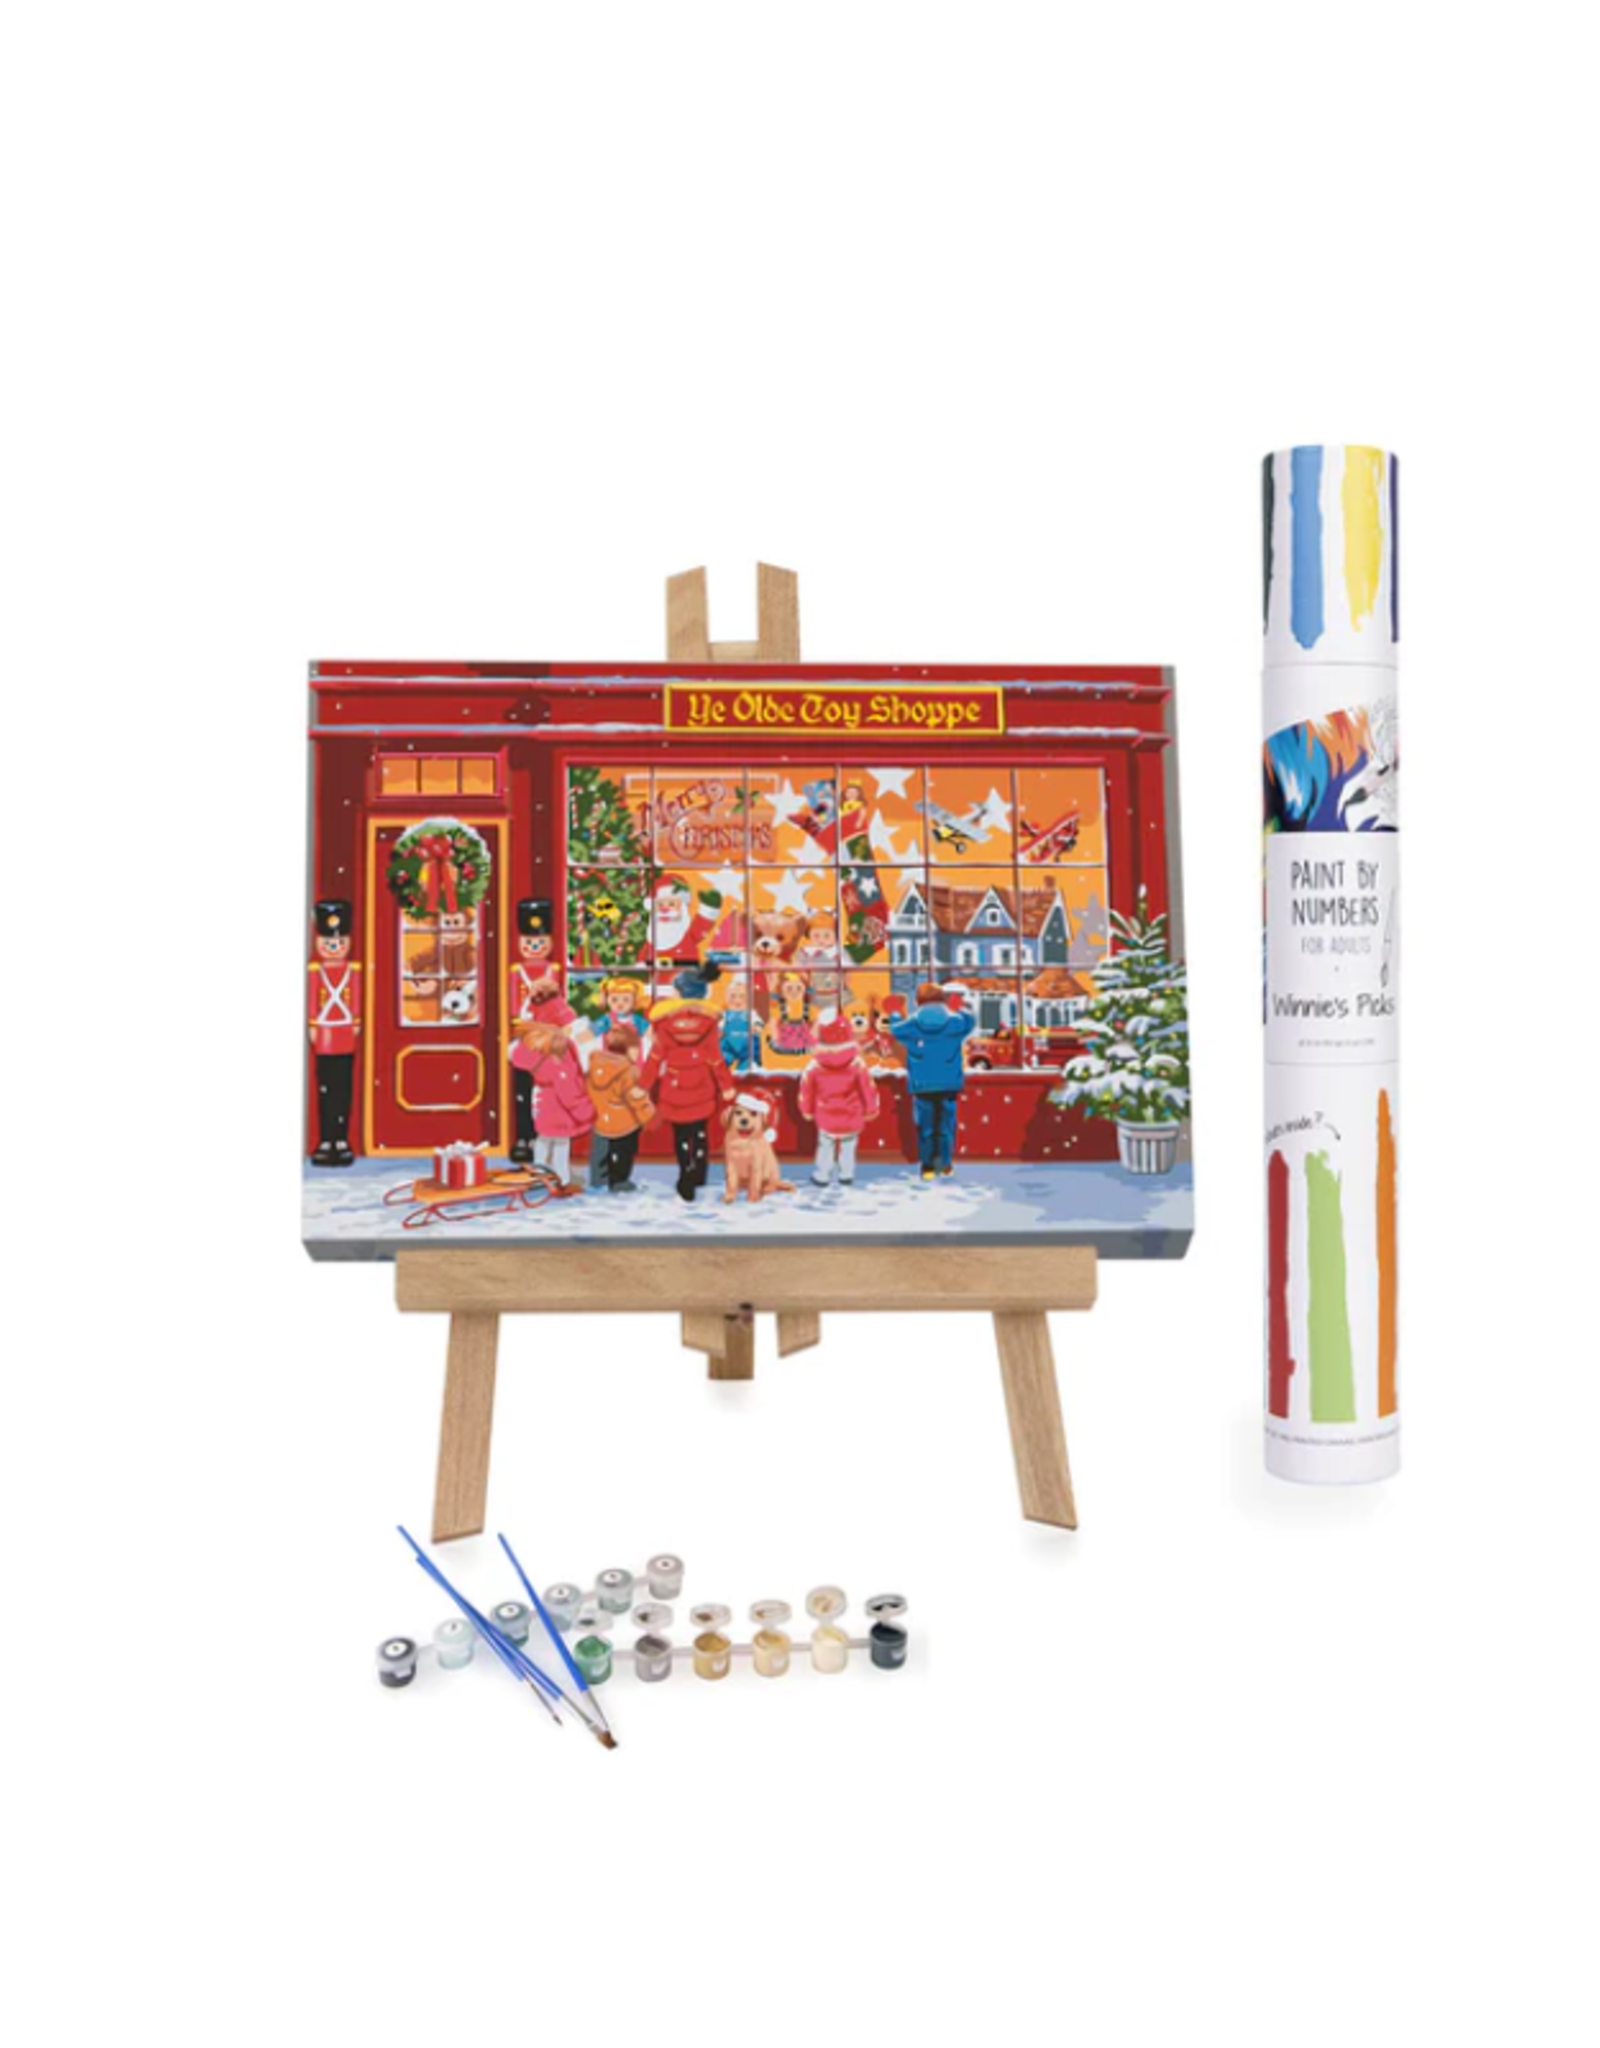 Winnie's Picks Paint by Numbers: Wishful Window Shopping - 16x24